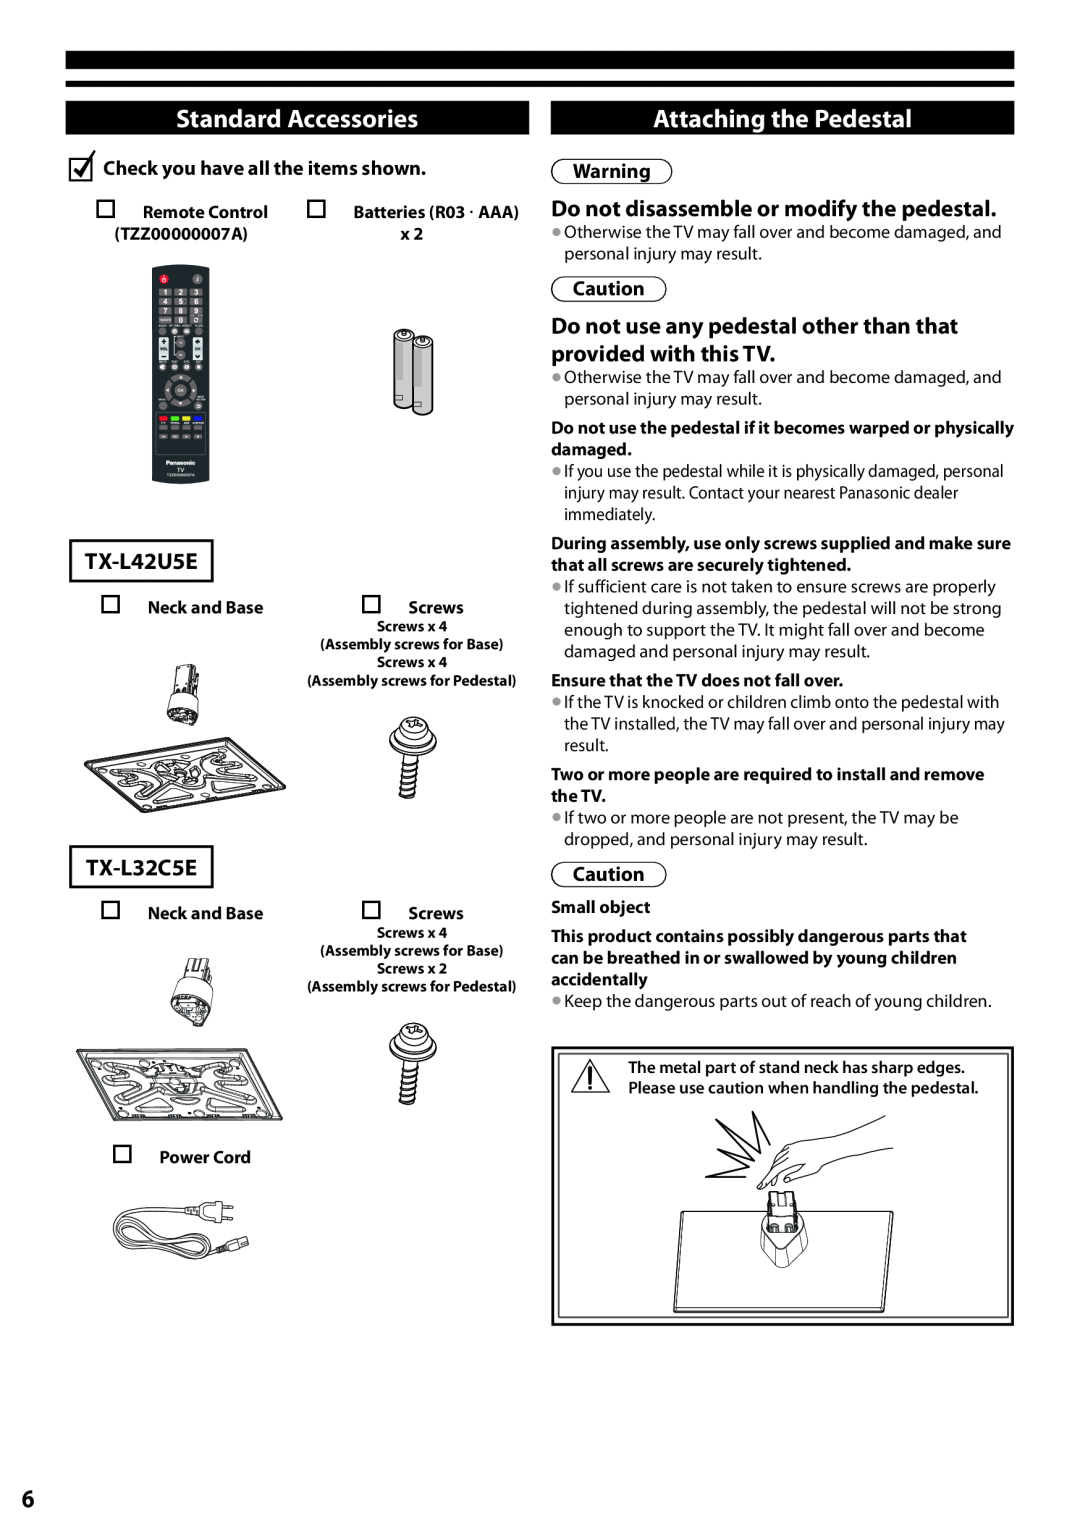 Panasonic TX-L42U5E Standard Accessories, Attaching the Pedestal, TX-L32C5E, Do not disassemble or modify the pedestal 